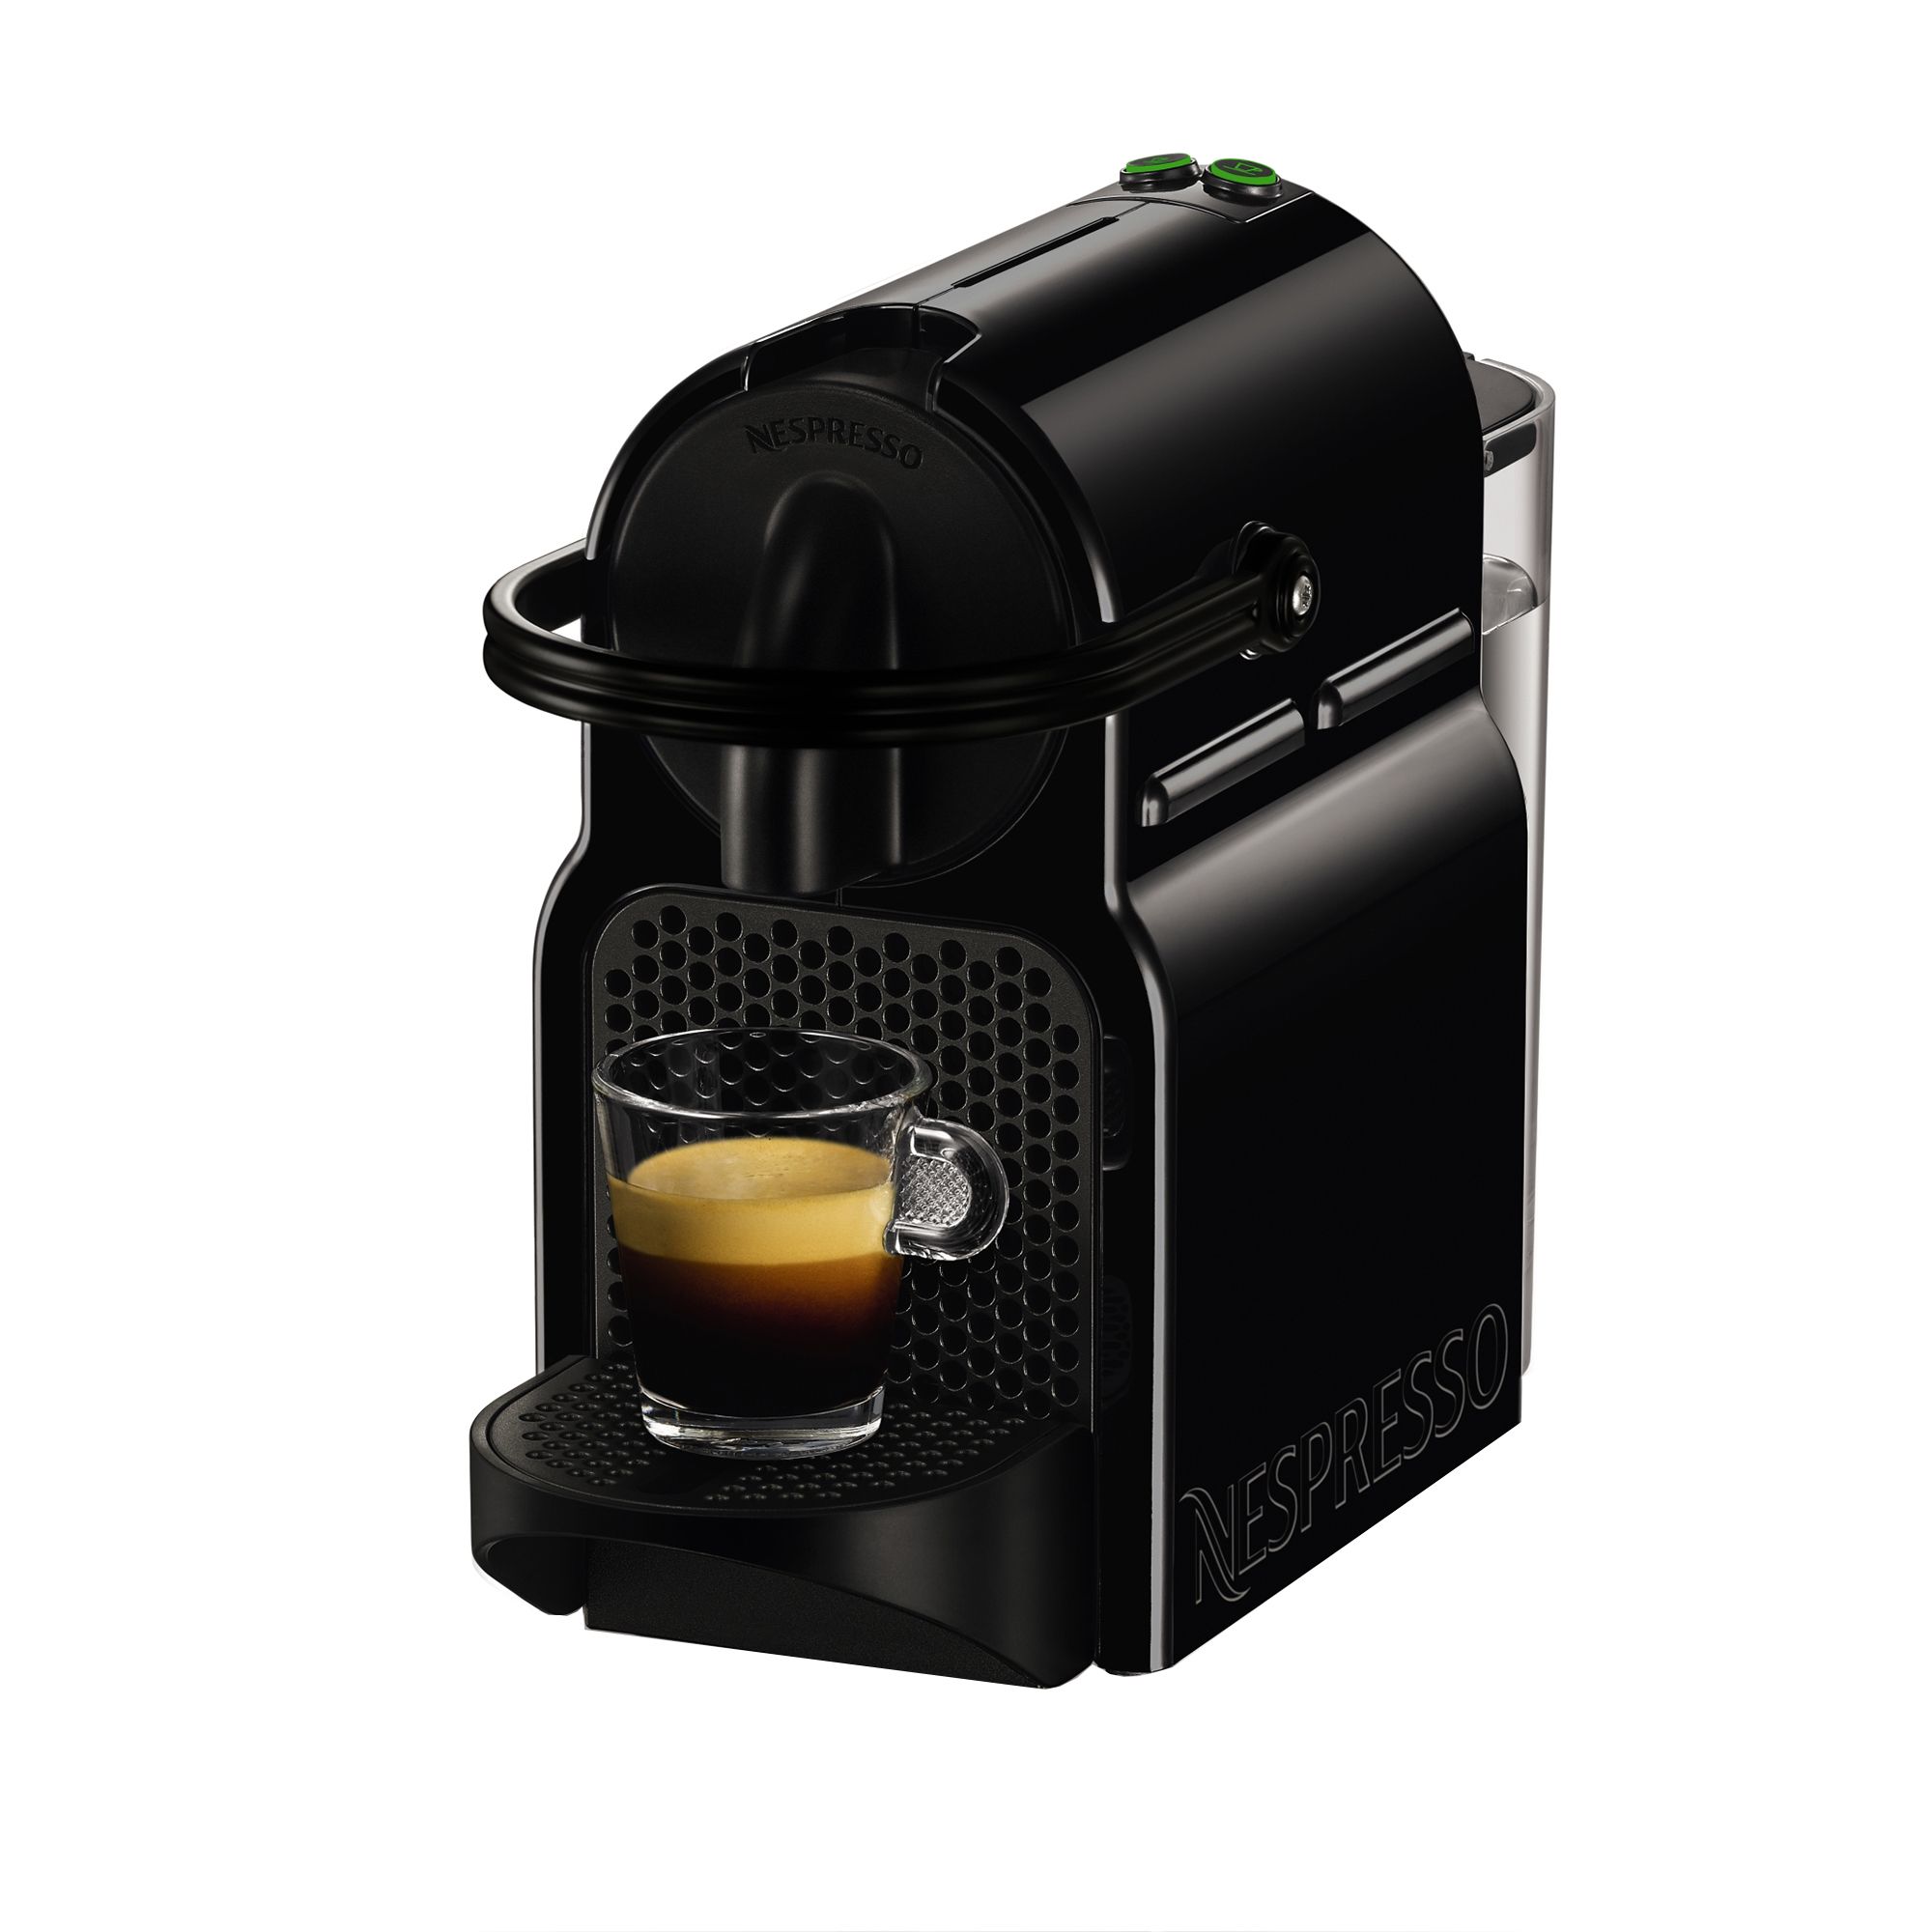 Nespresso EN80.B Inissia fekete kapszulás kávéfőző 